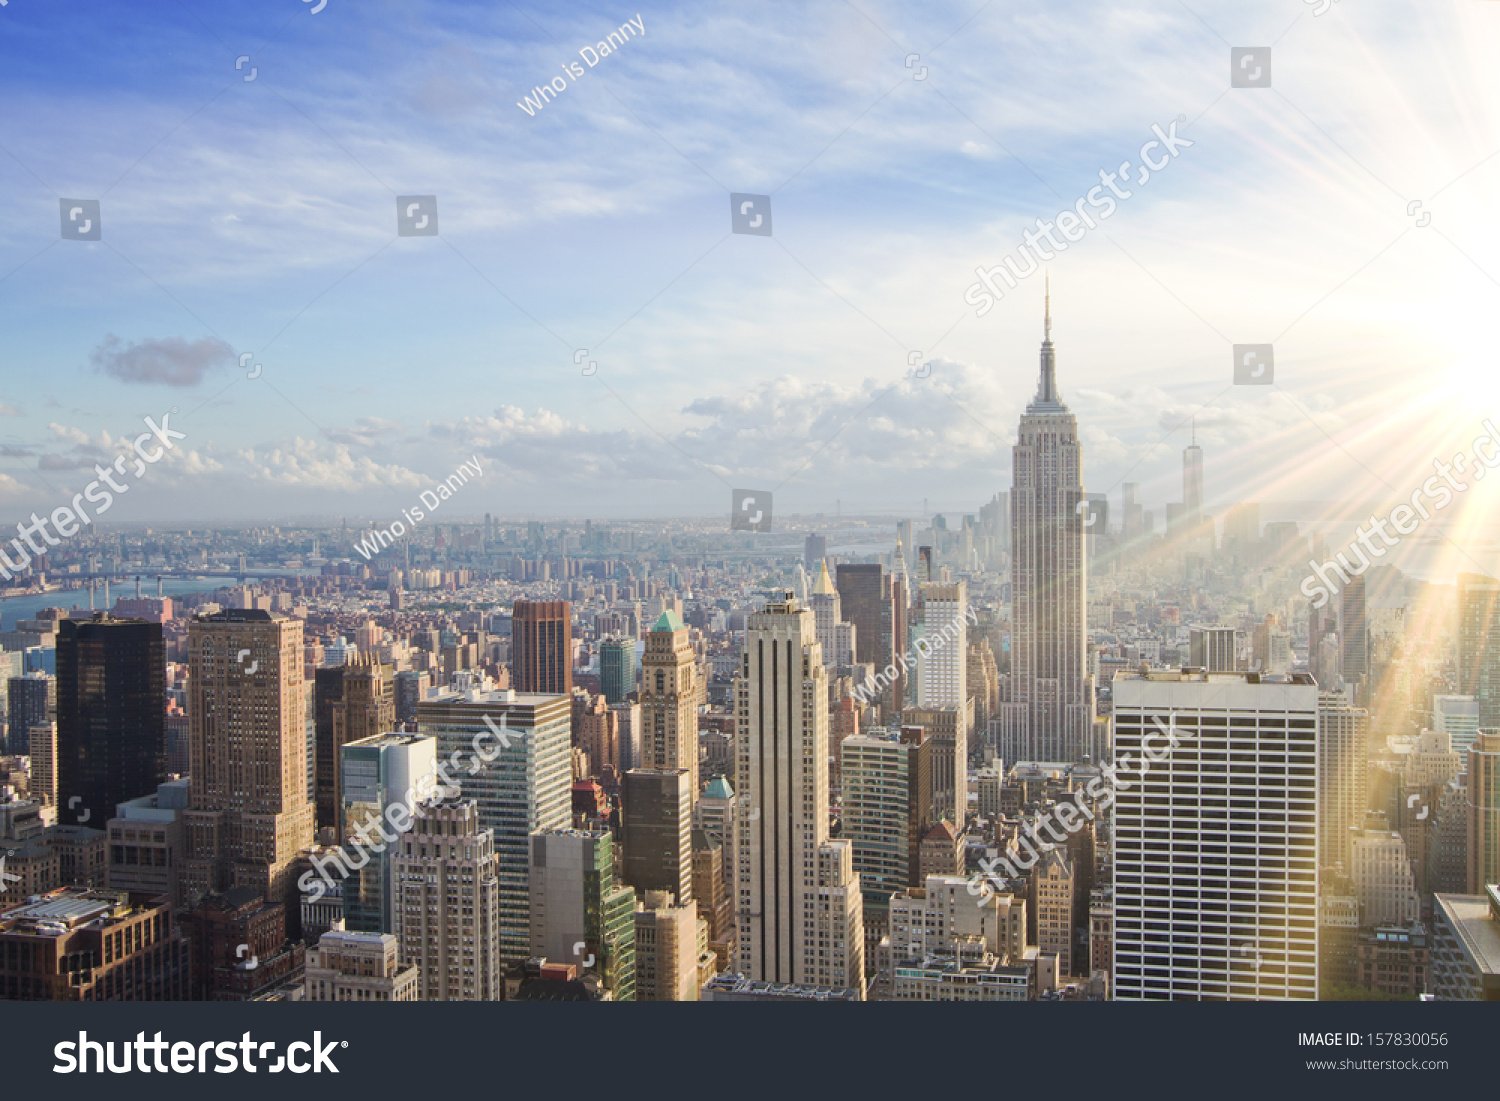 urban skyline at sunset. New York city #157830056